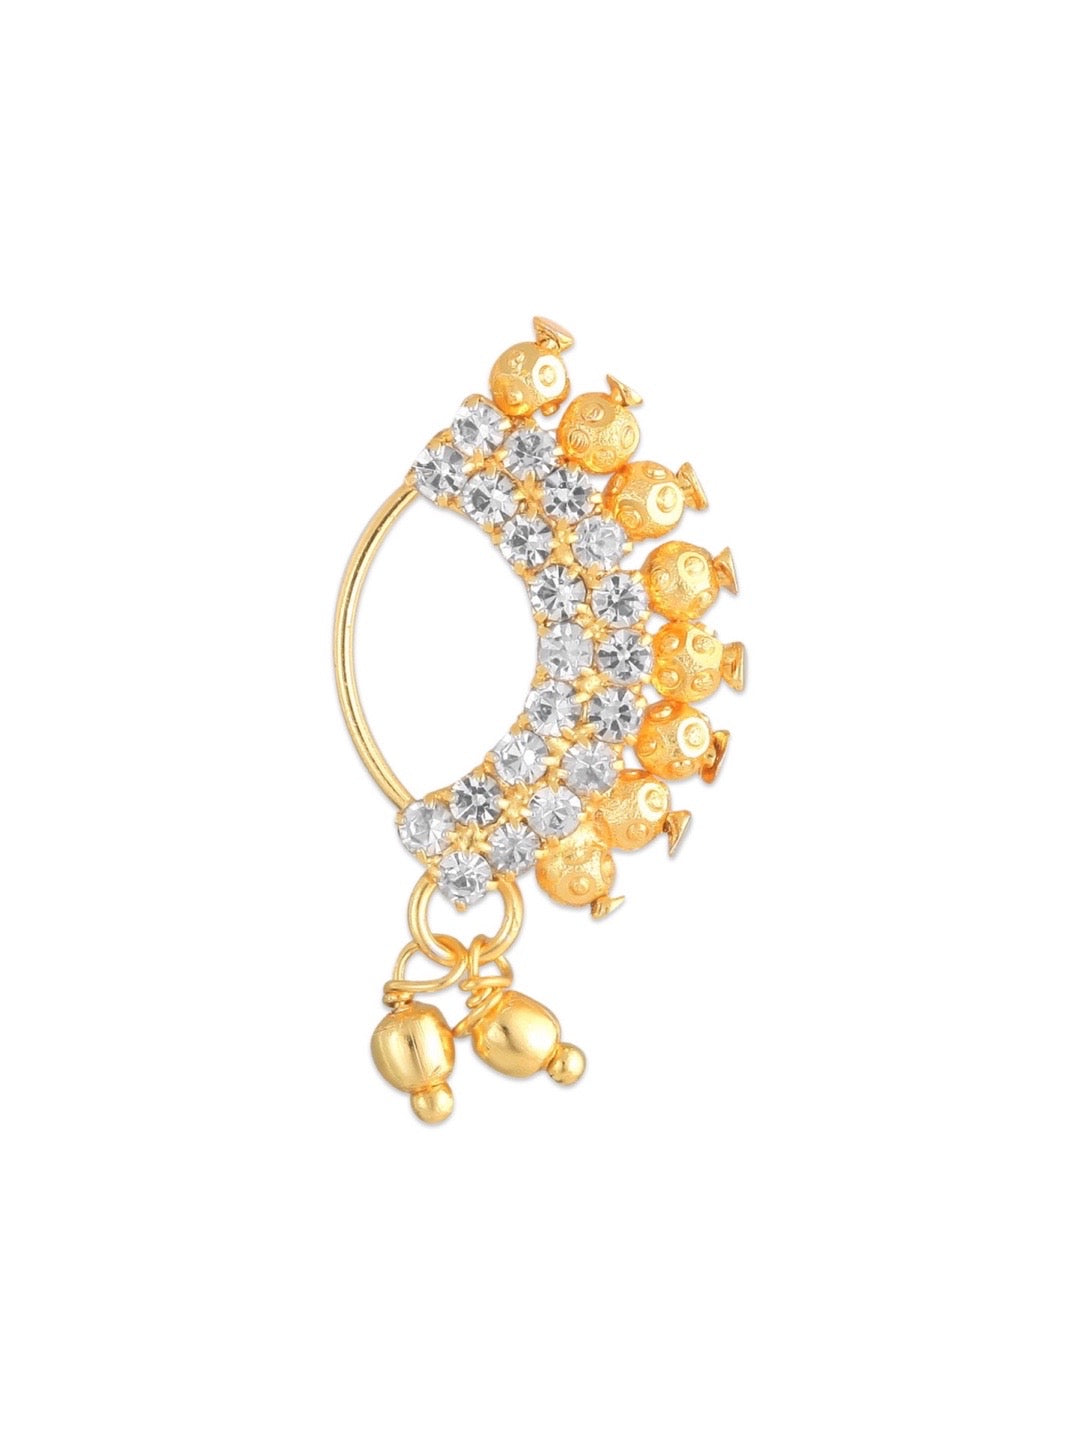 Gold Plated Maharashtrian Nath/Nose Pin Gold Beads American Diamond Studded